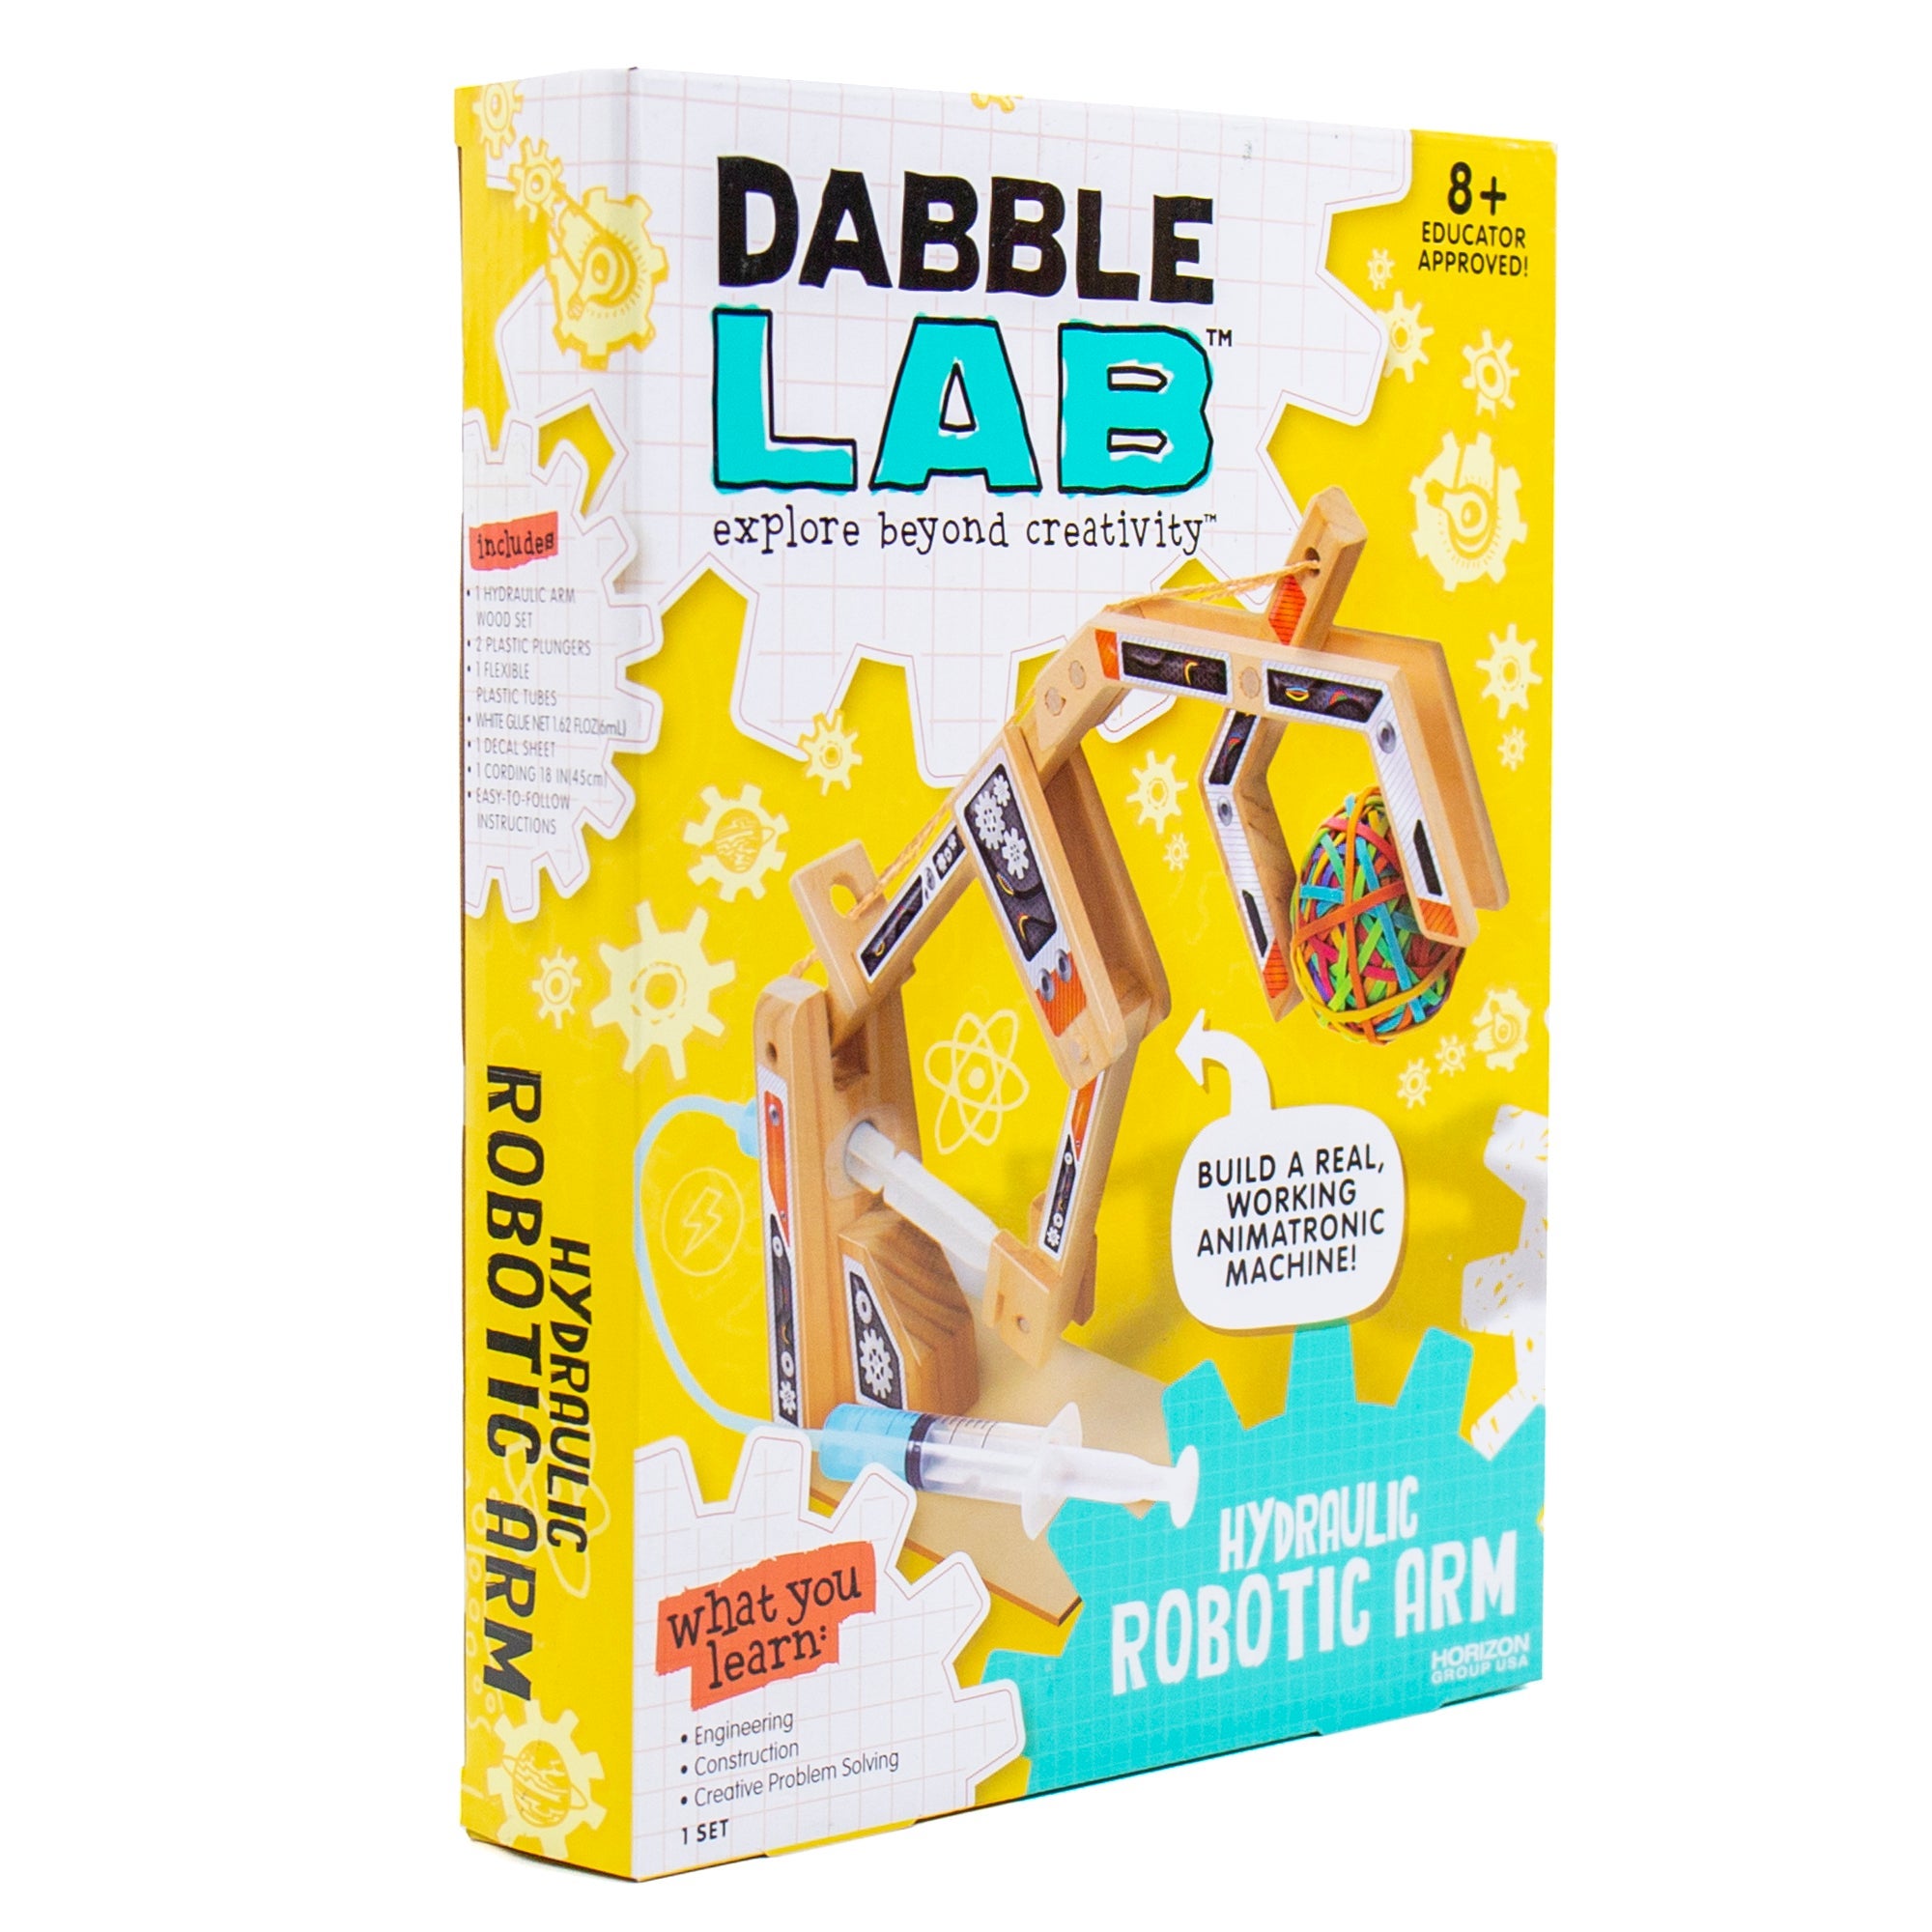 Dabble Lab - Hydraulic Robotic Arm